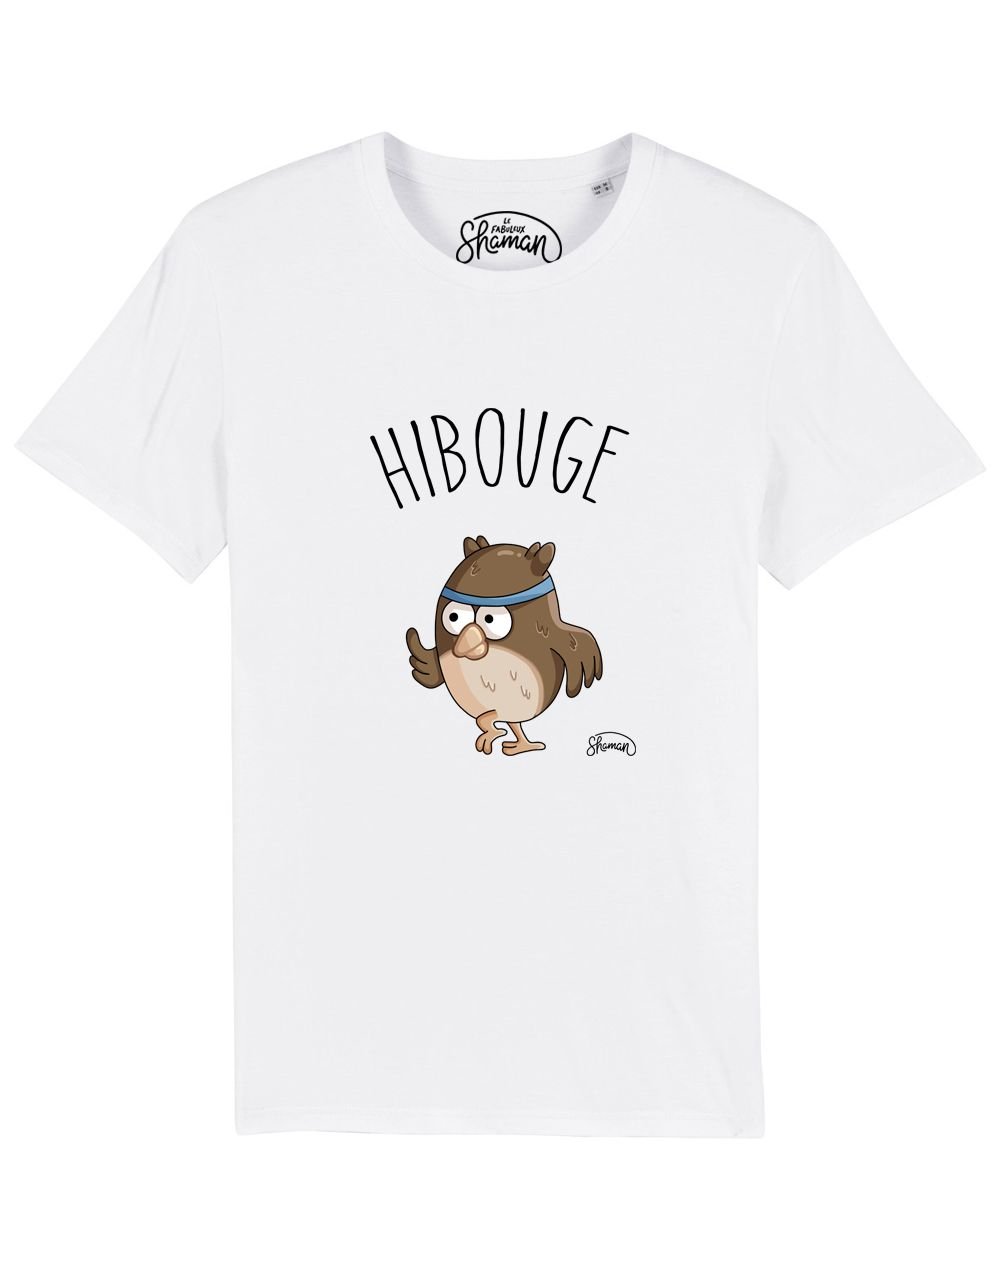 Tee-shirt Hibouge